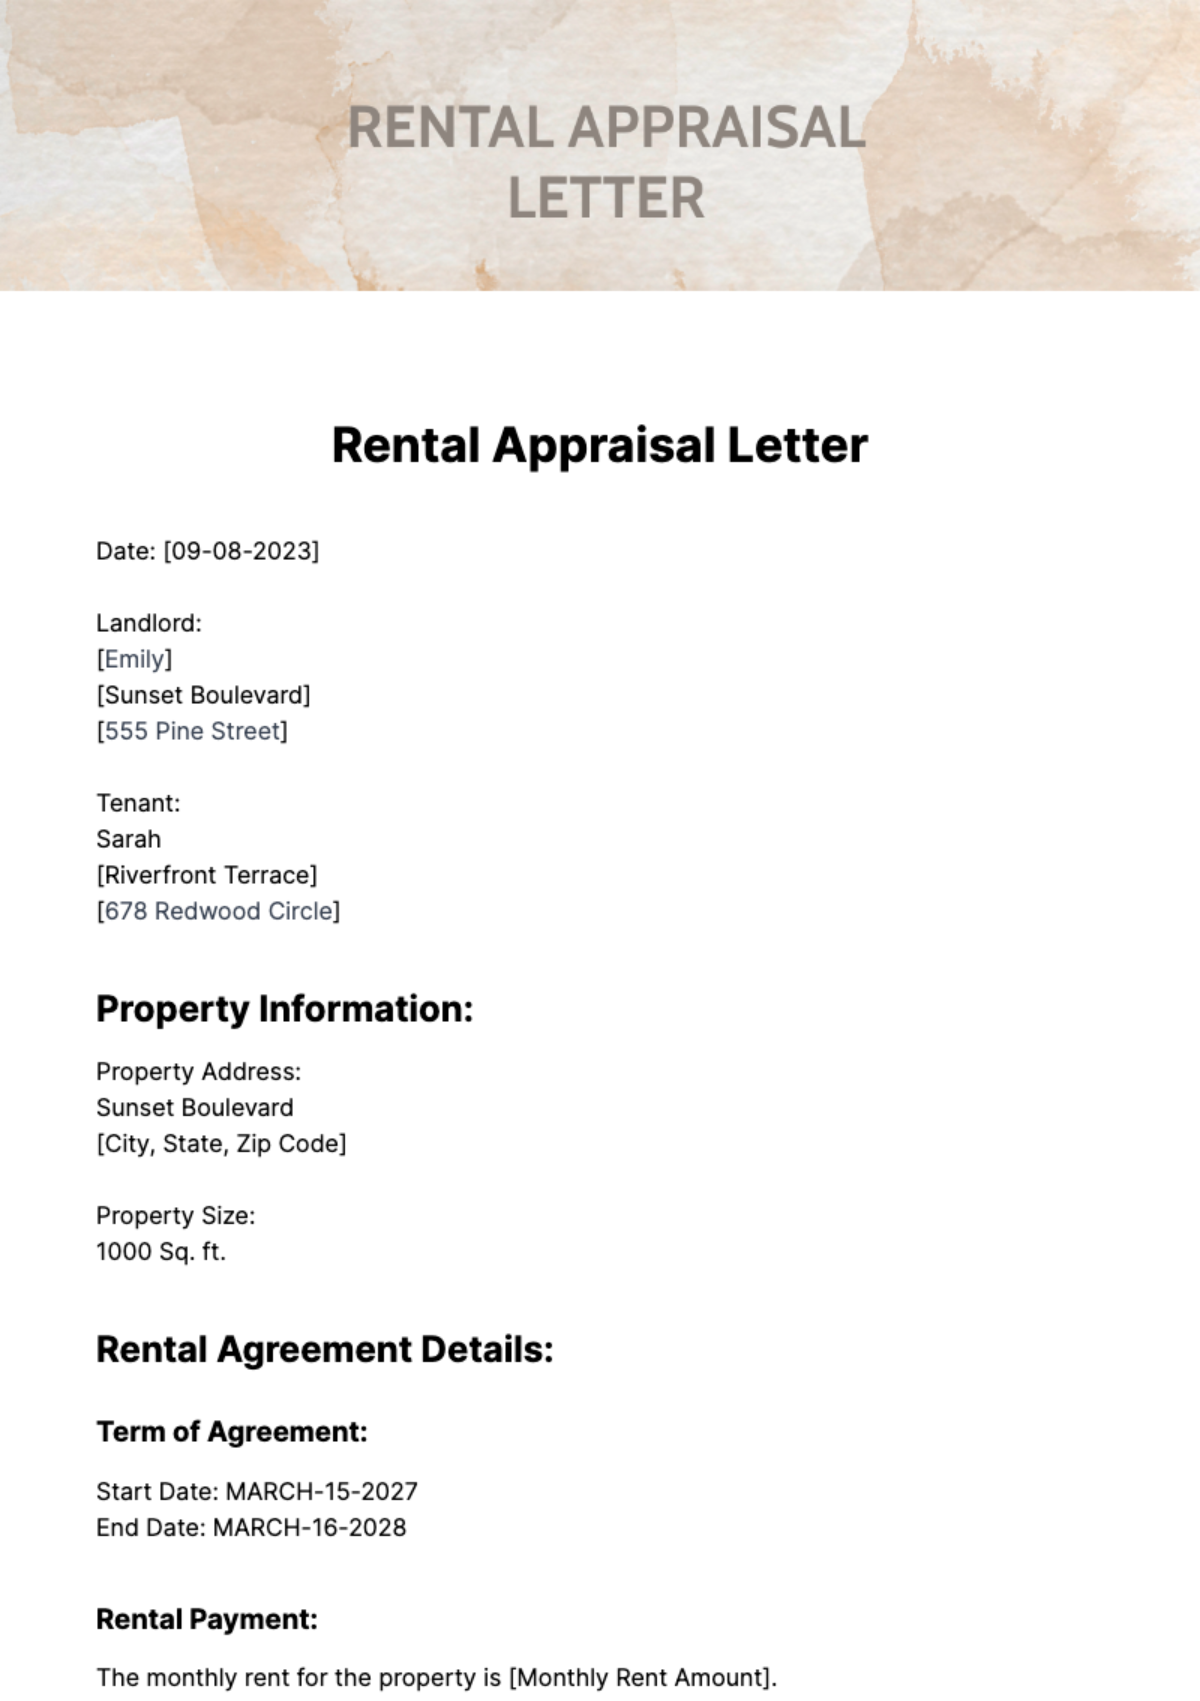 Free Rental Appraisal Letter Template